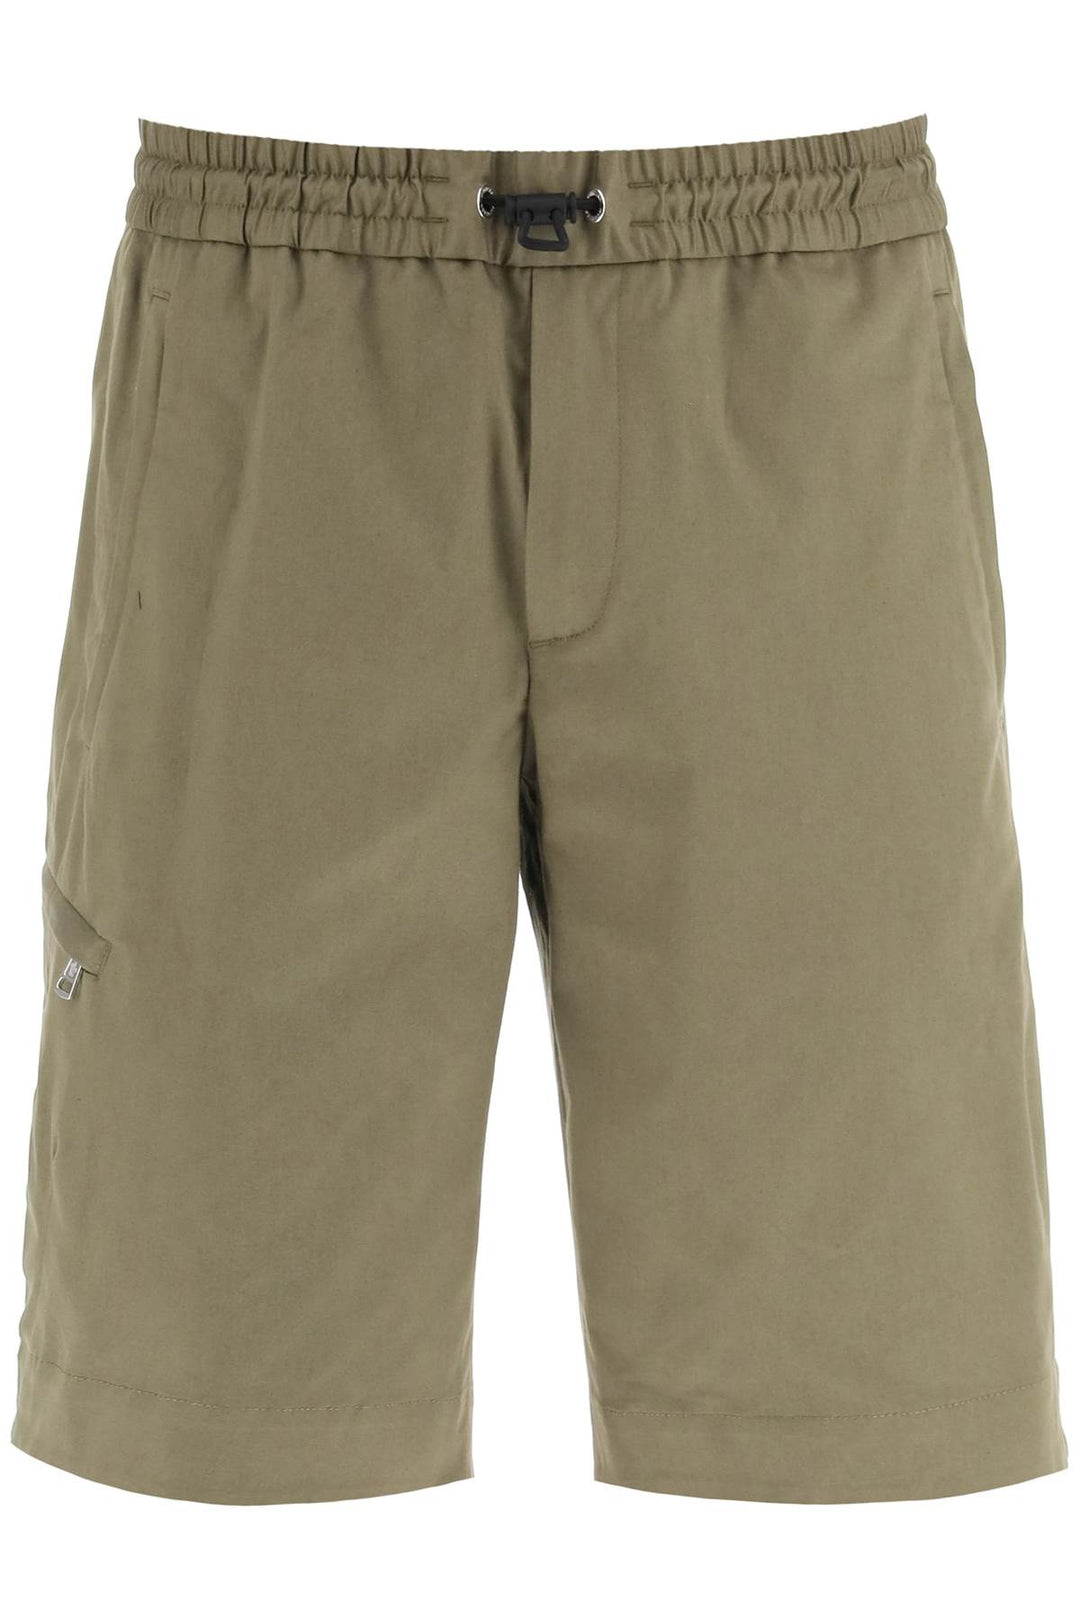 Moncler Shorts With Hook And Loop Closure   Green